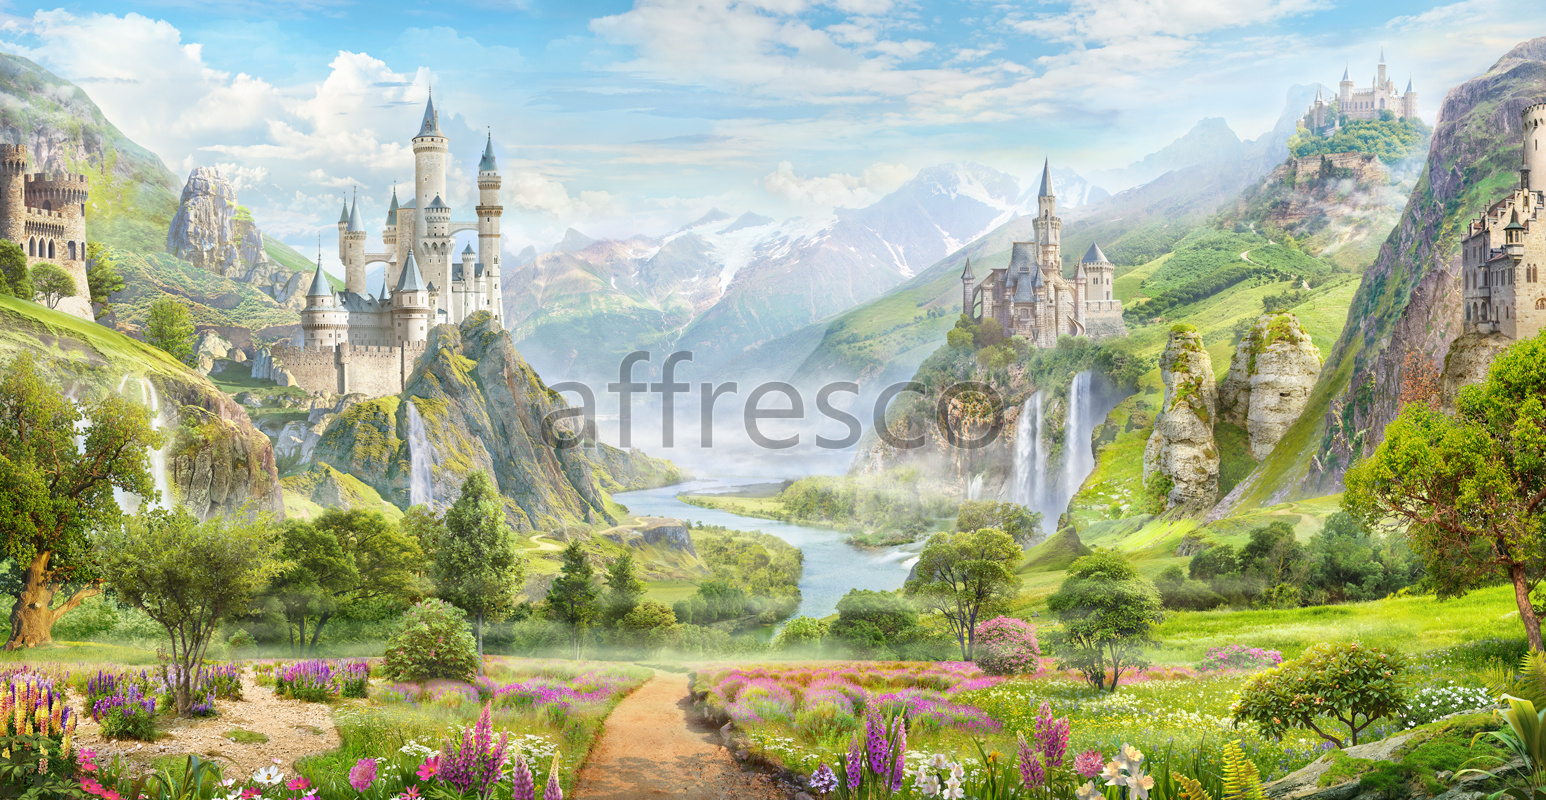 6552 | The best landscapes | Valley of castles | Affresco Factory